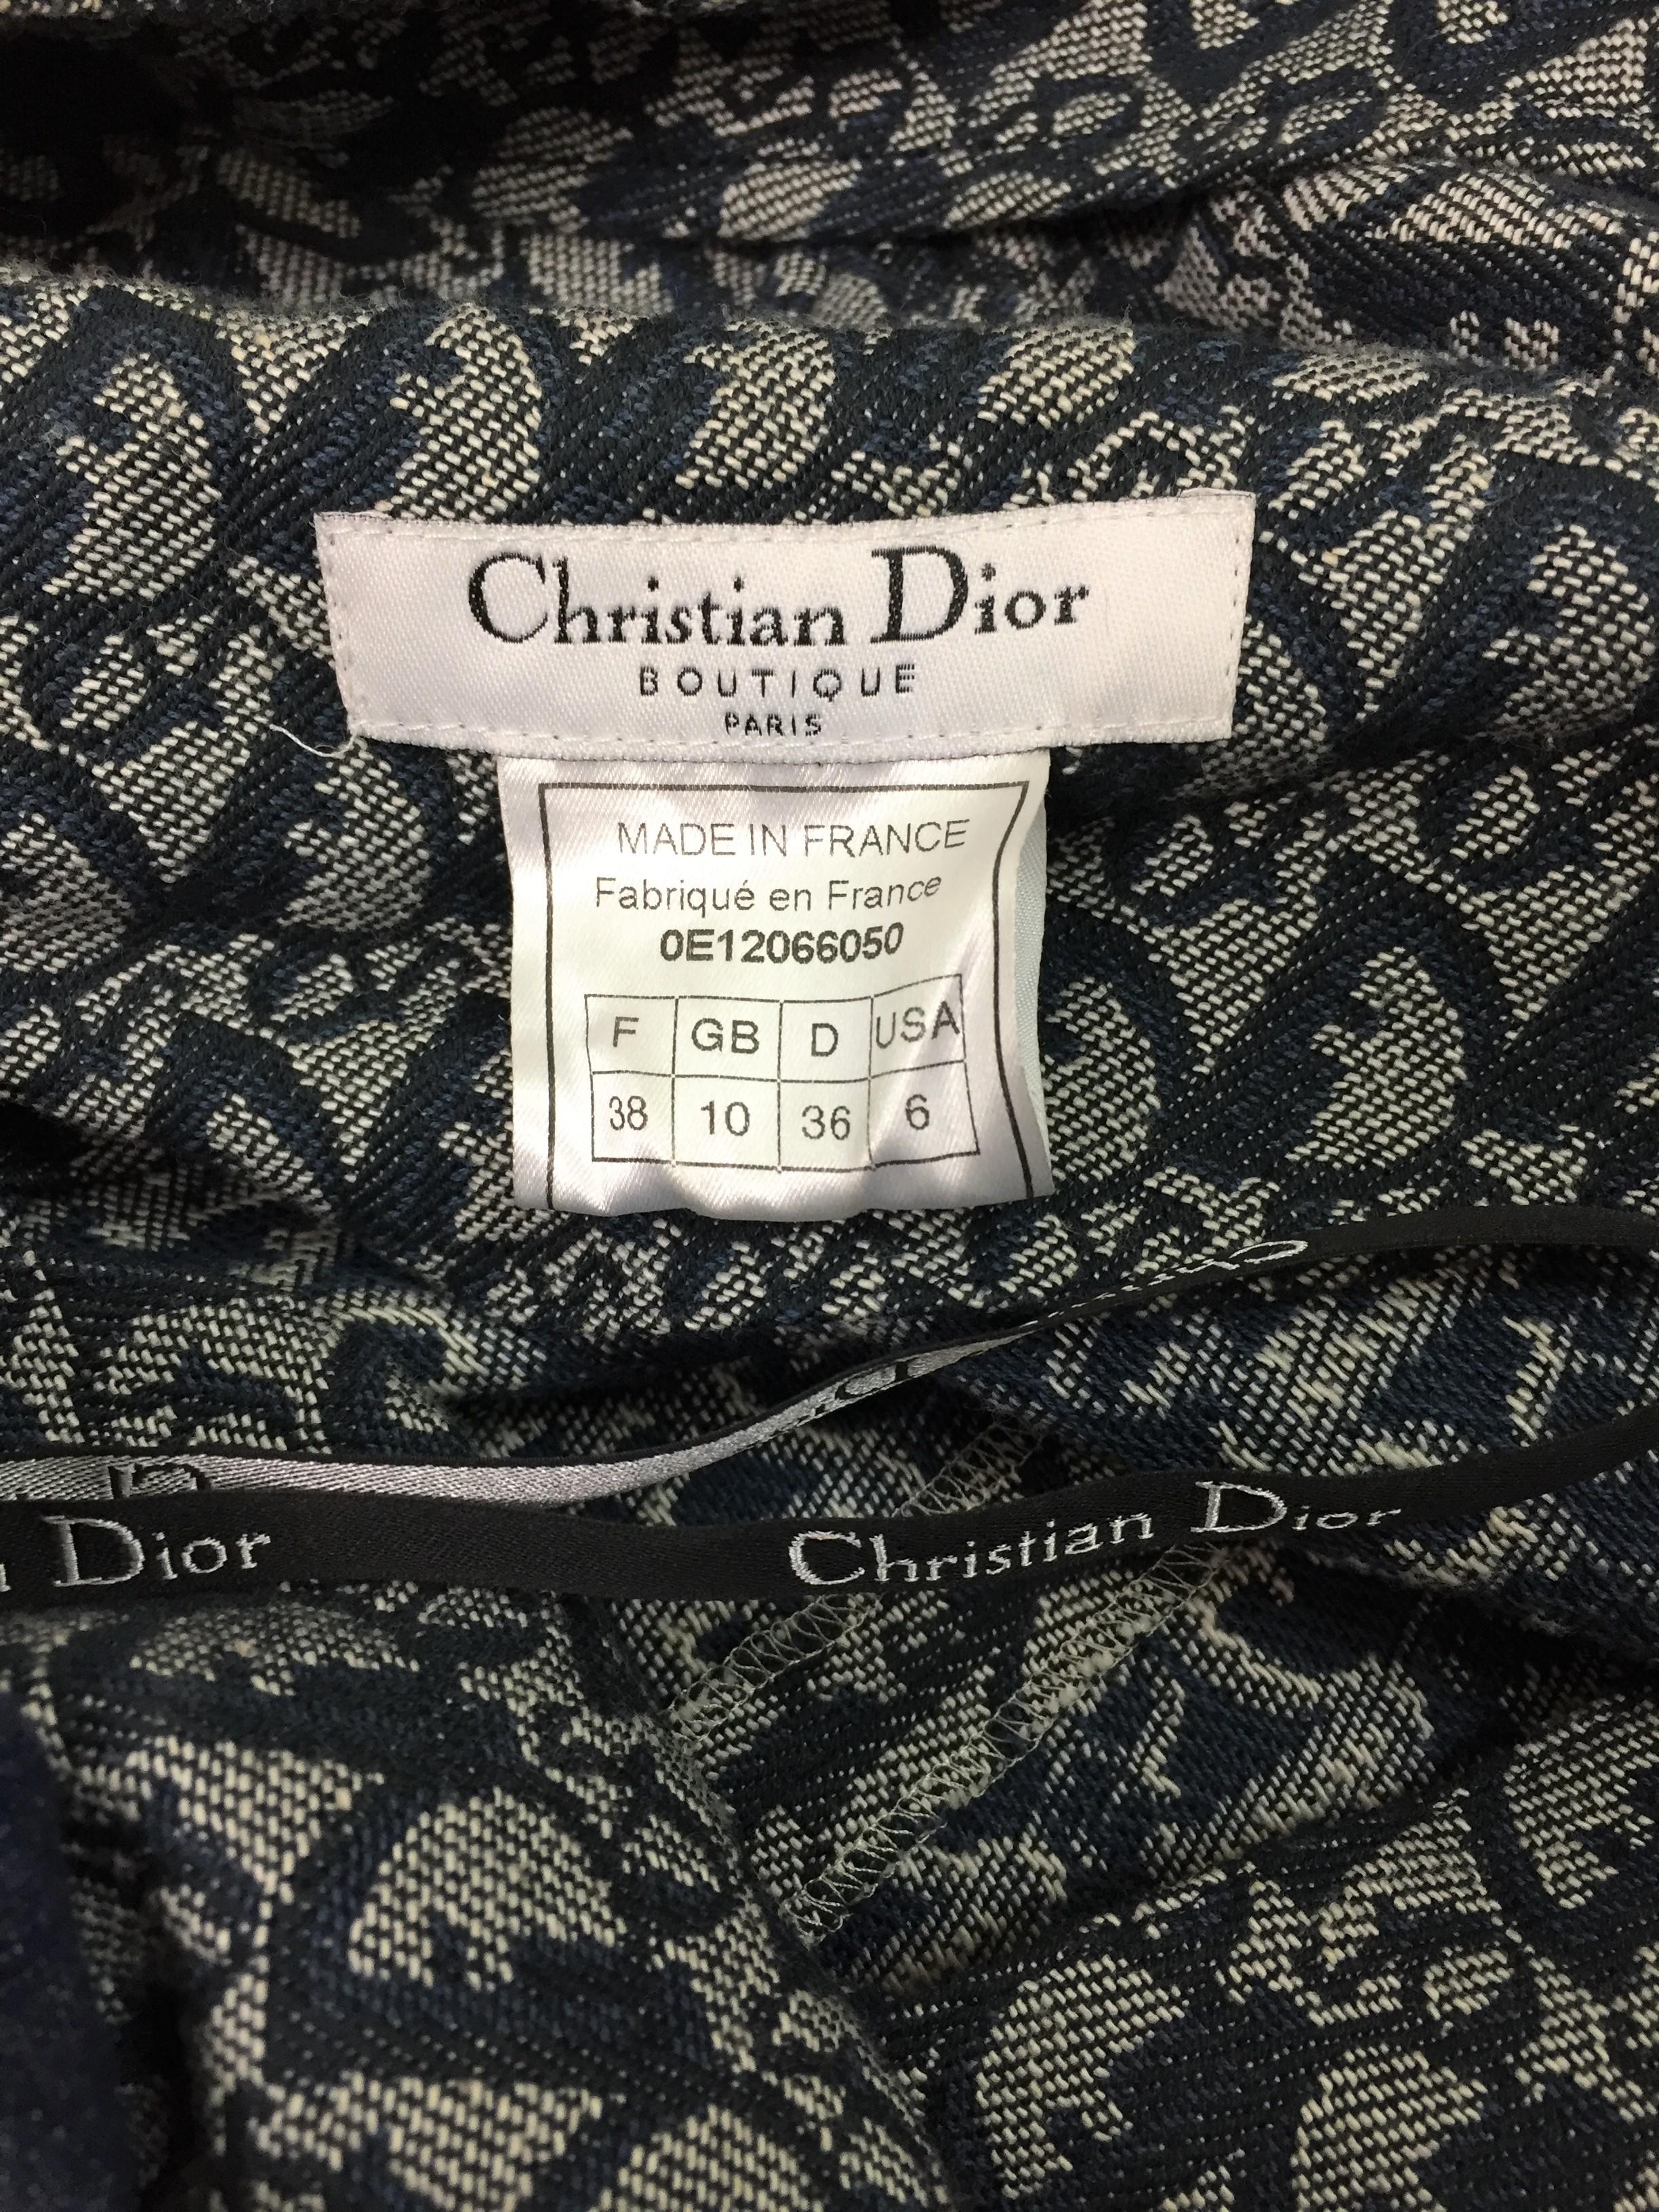 S/S 2000 Christian Dior Runway by John Galliano Monogram Logo Dress at ...